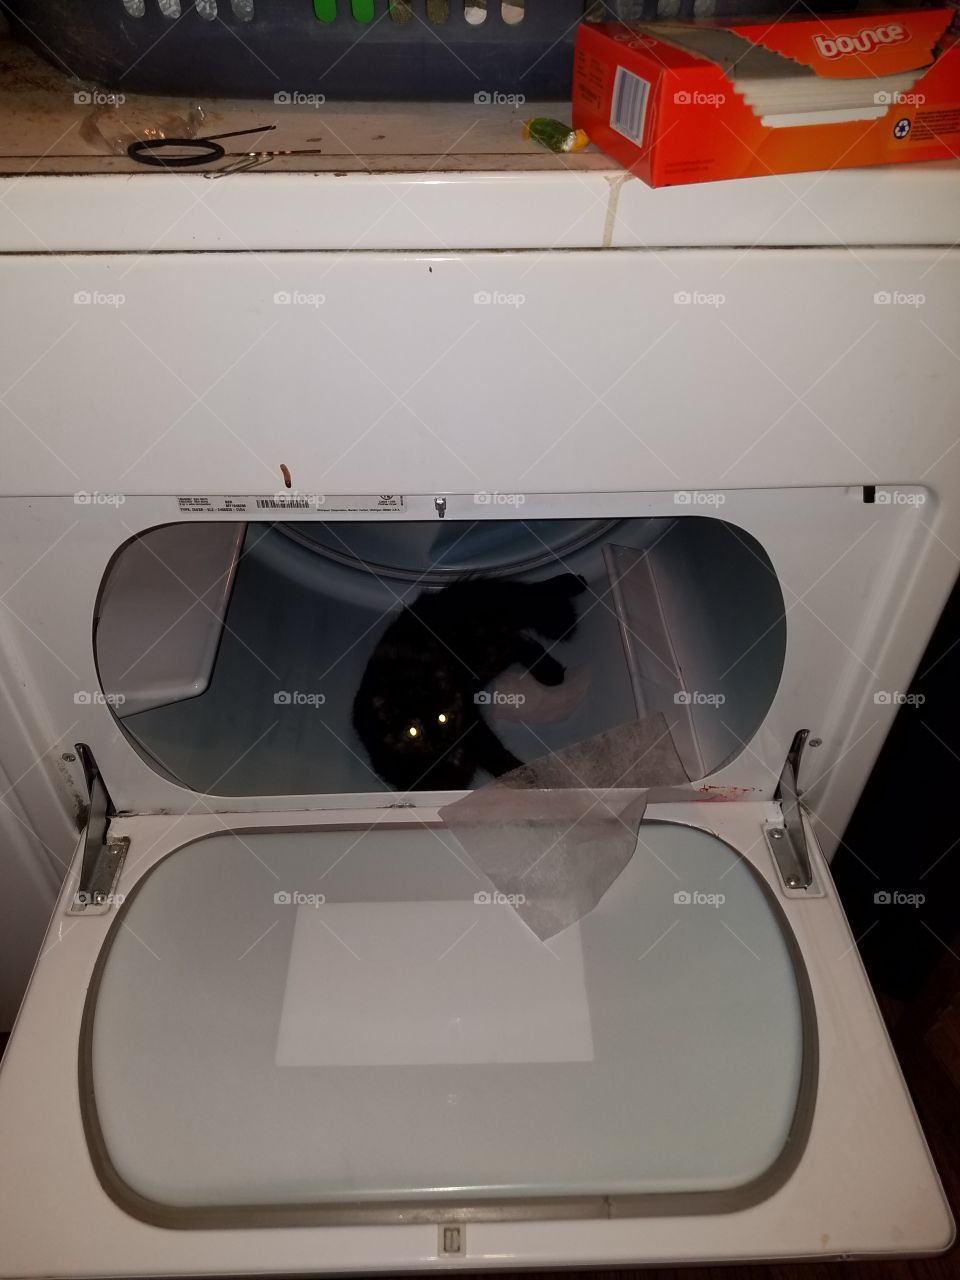 Kitty relaxing in the dryer, cat, fur, looking, dryer, dryer sheet, cute, mischievous